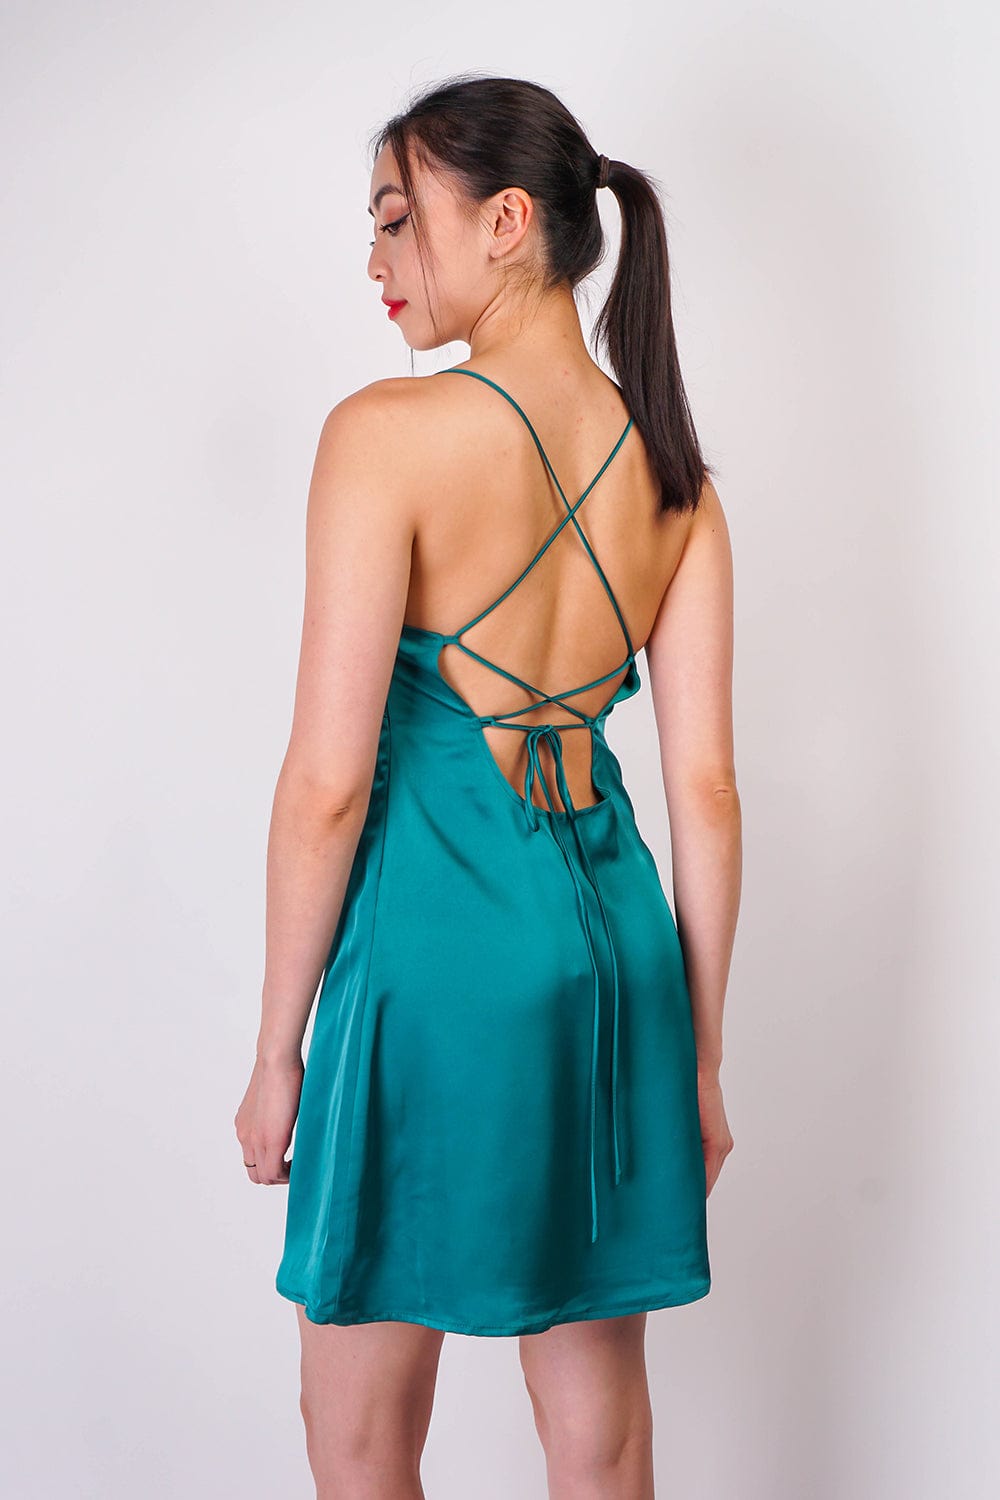 DCD DRESSES Emerald Satin Babydoll Bodice Mini Dress